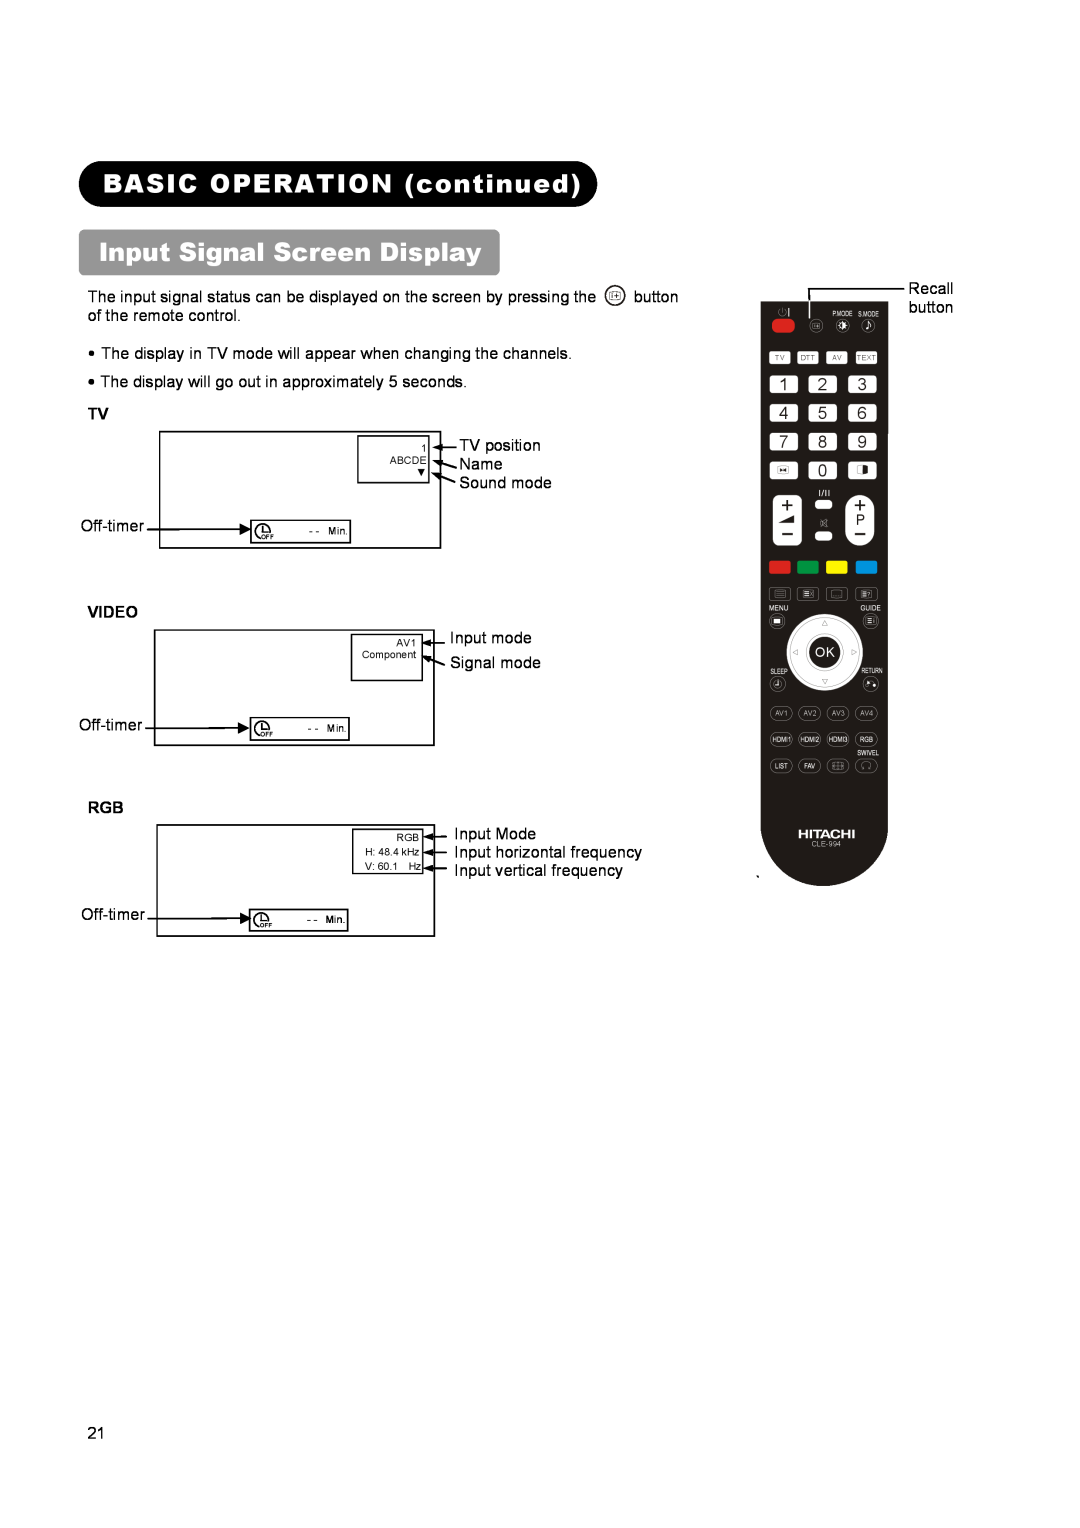 Hitachi L32A01A, L37A01A, L26A01A user manual BASIC OPERATION continued Input Signal Screen Display, + +, 1 2 4 5 7 8 